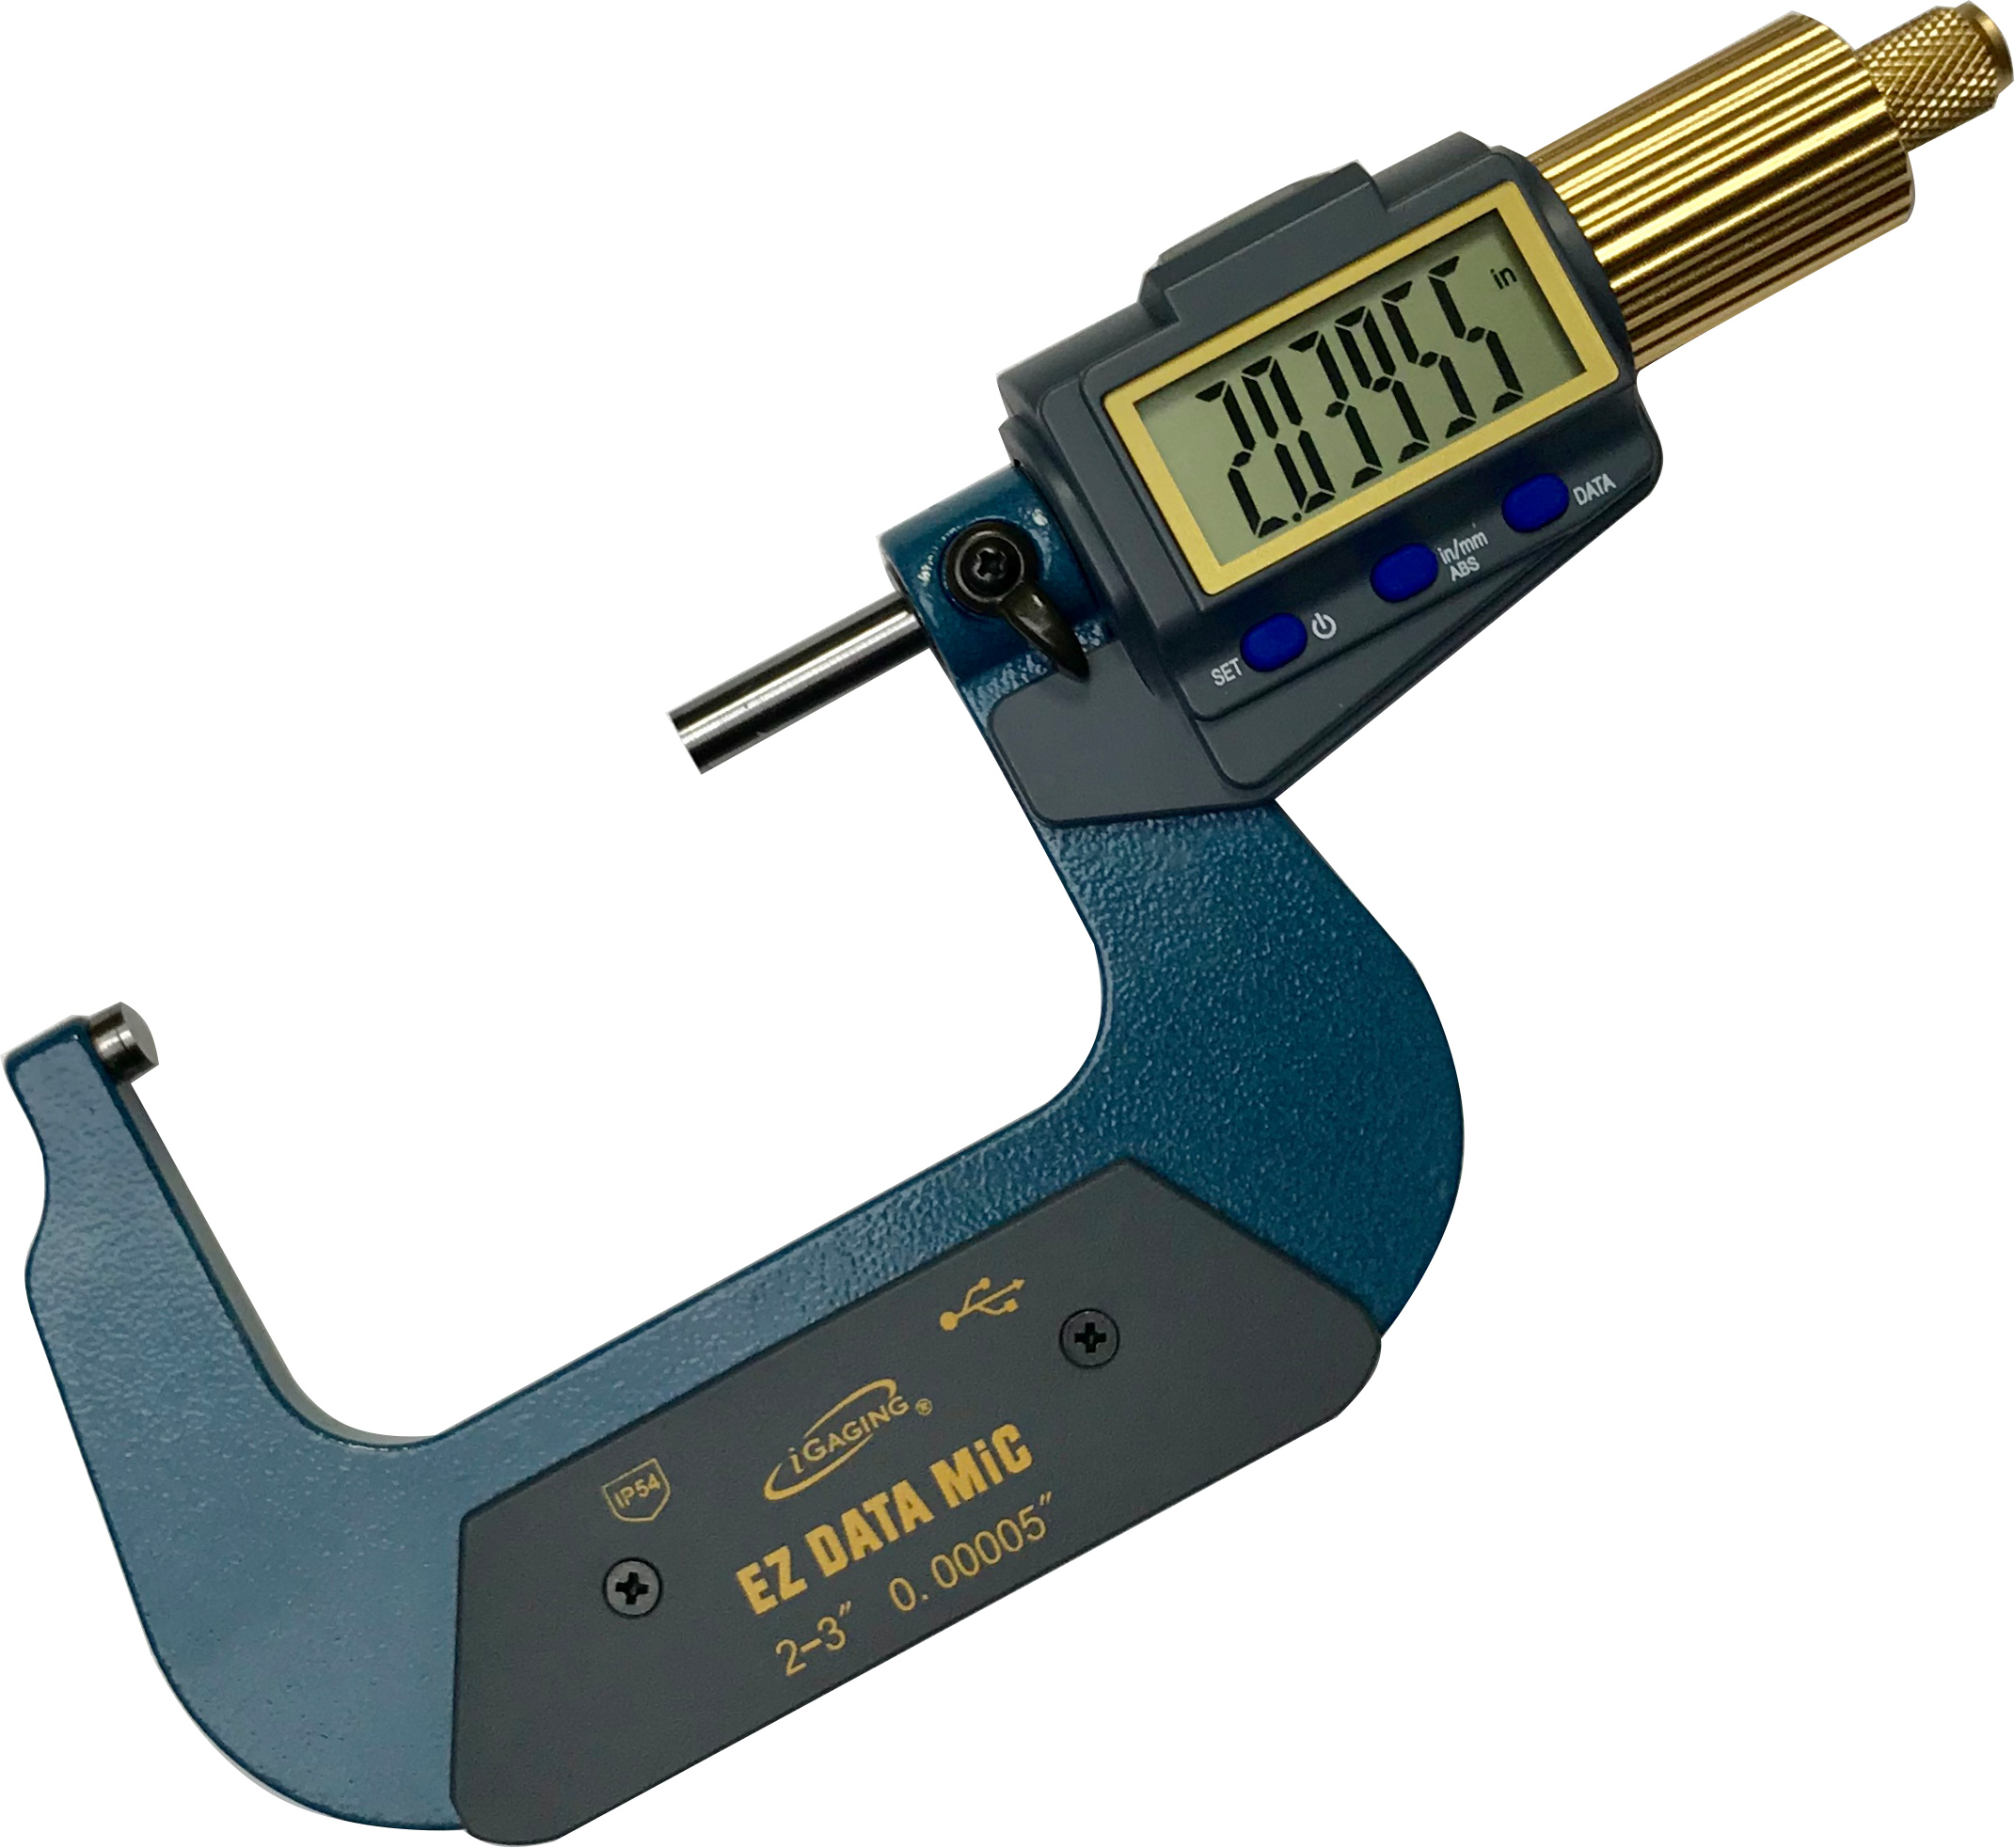 iGAGING IP54 EZ Data Micrometer 2-3"